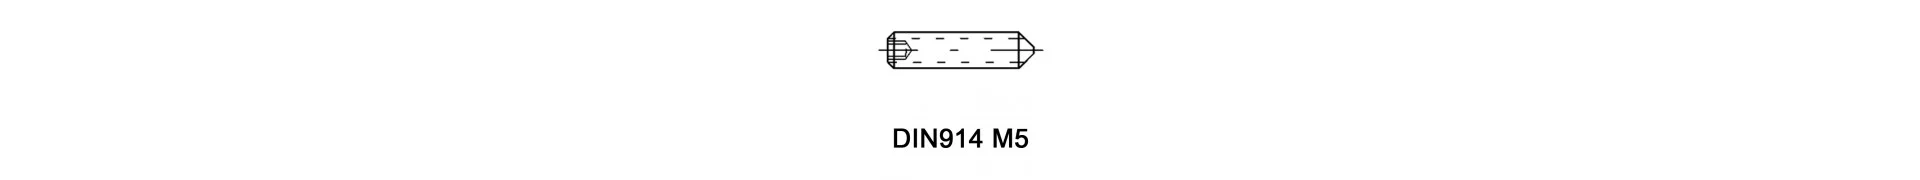 DIN914 M5